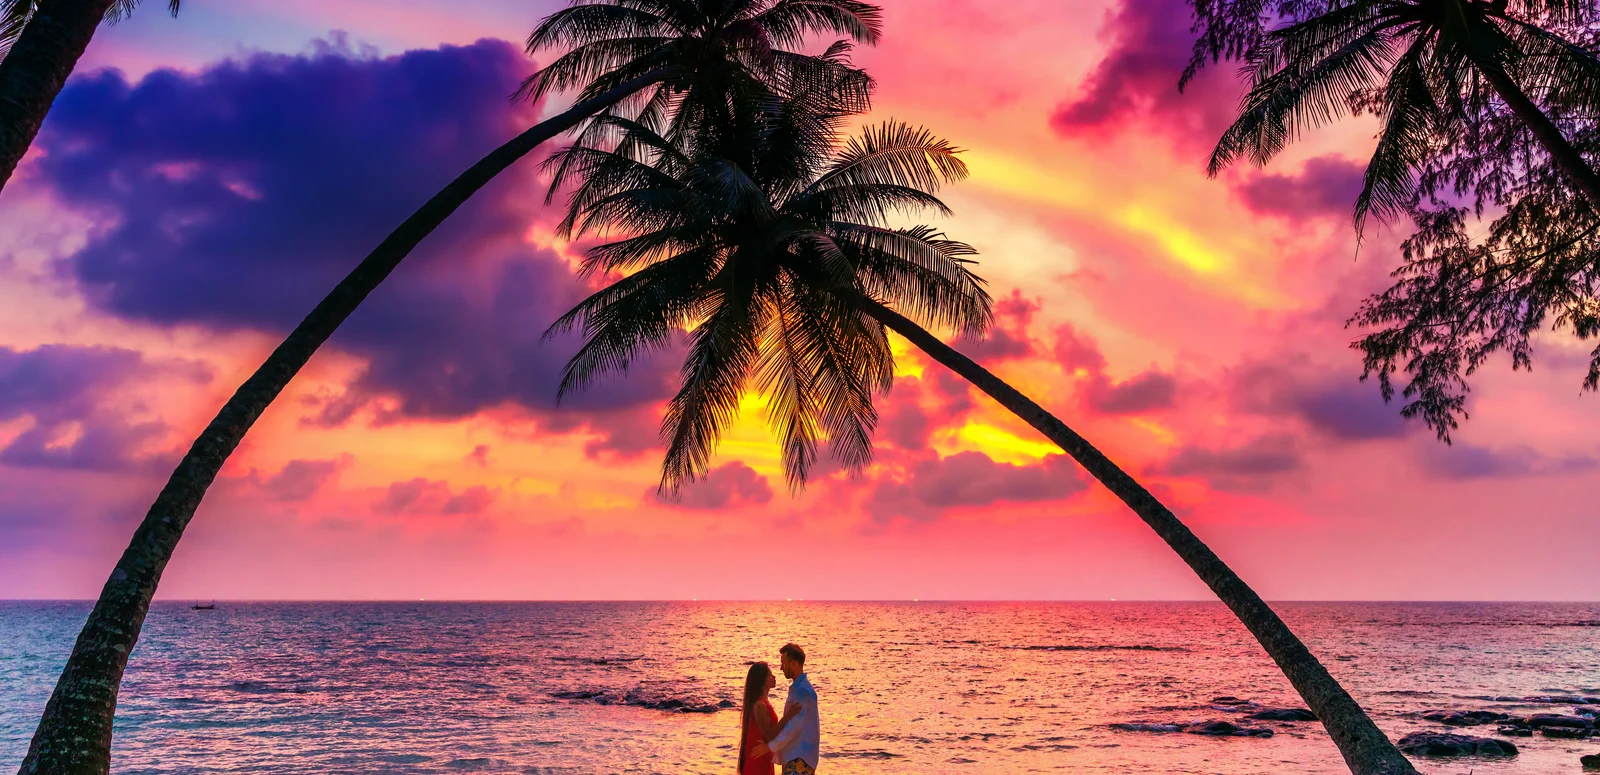 4. Singapore Best Honeymoon Spot For Couples In World